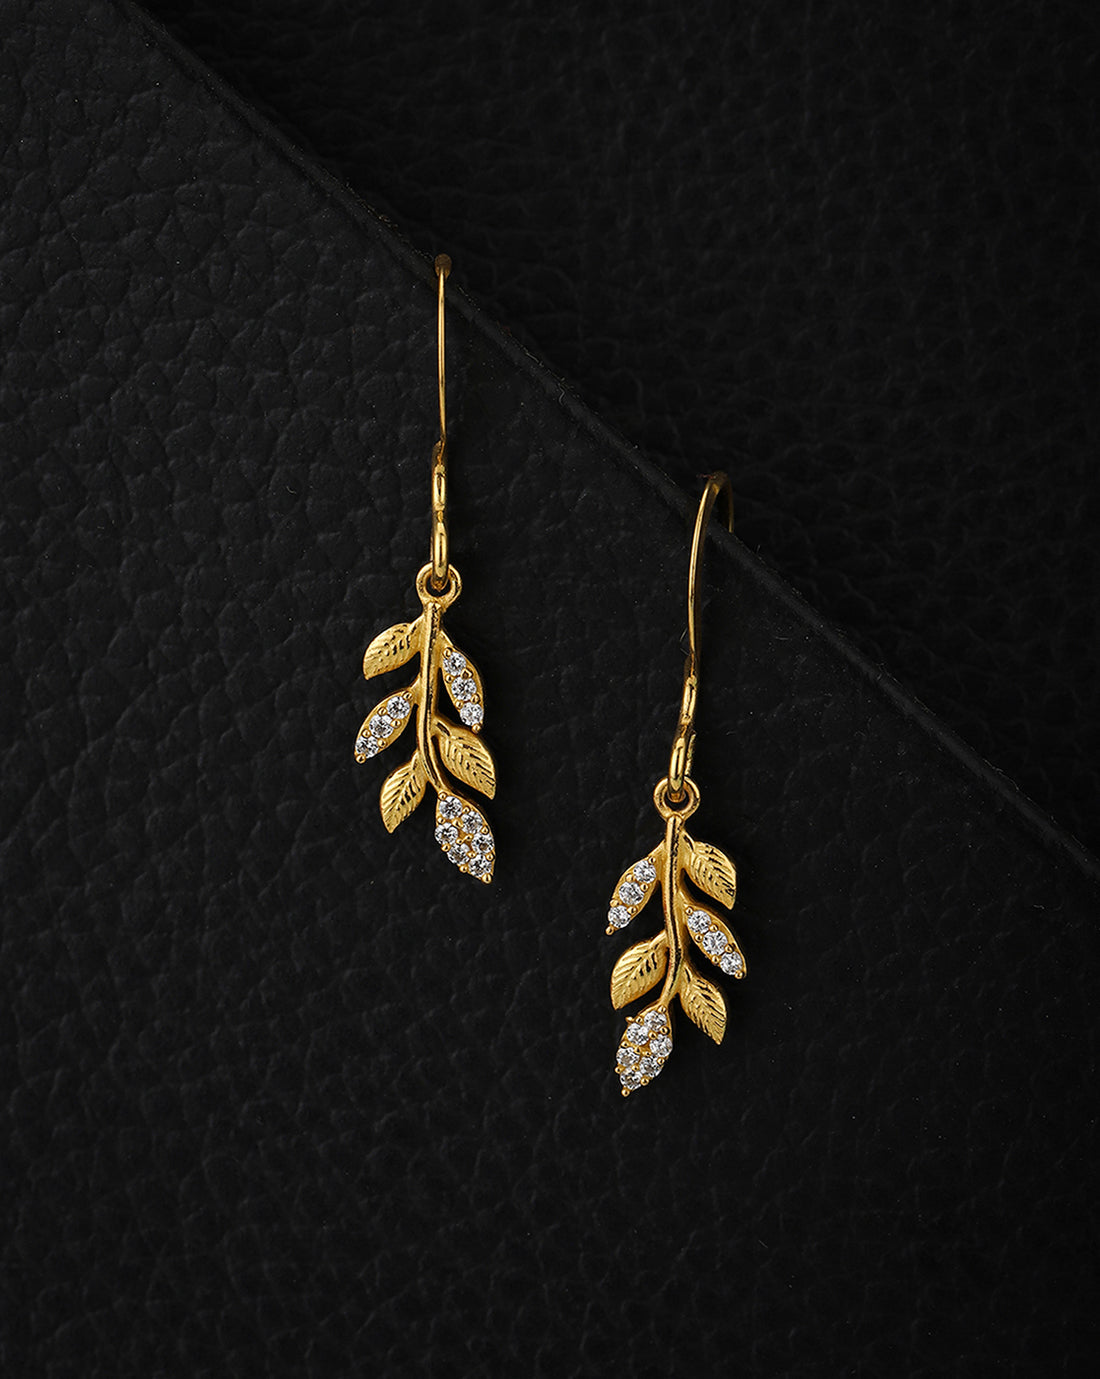 Carlton London Gold Plated Cz Leaf Drop Earring For Women